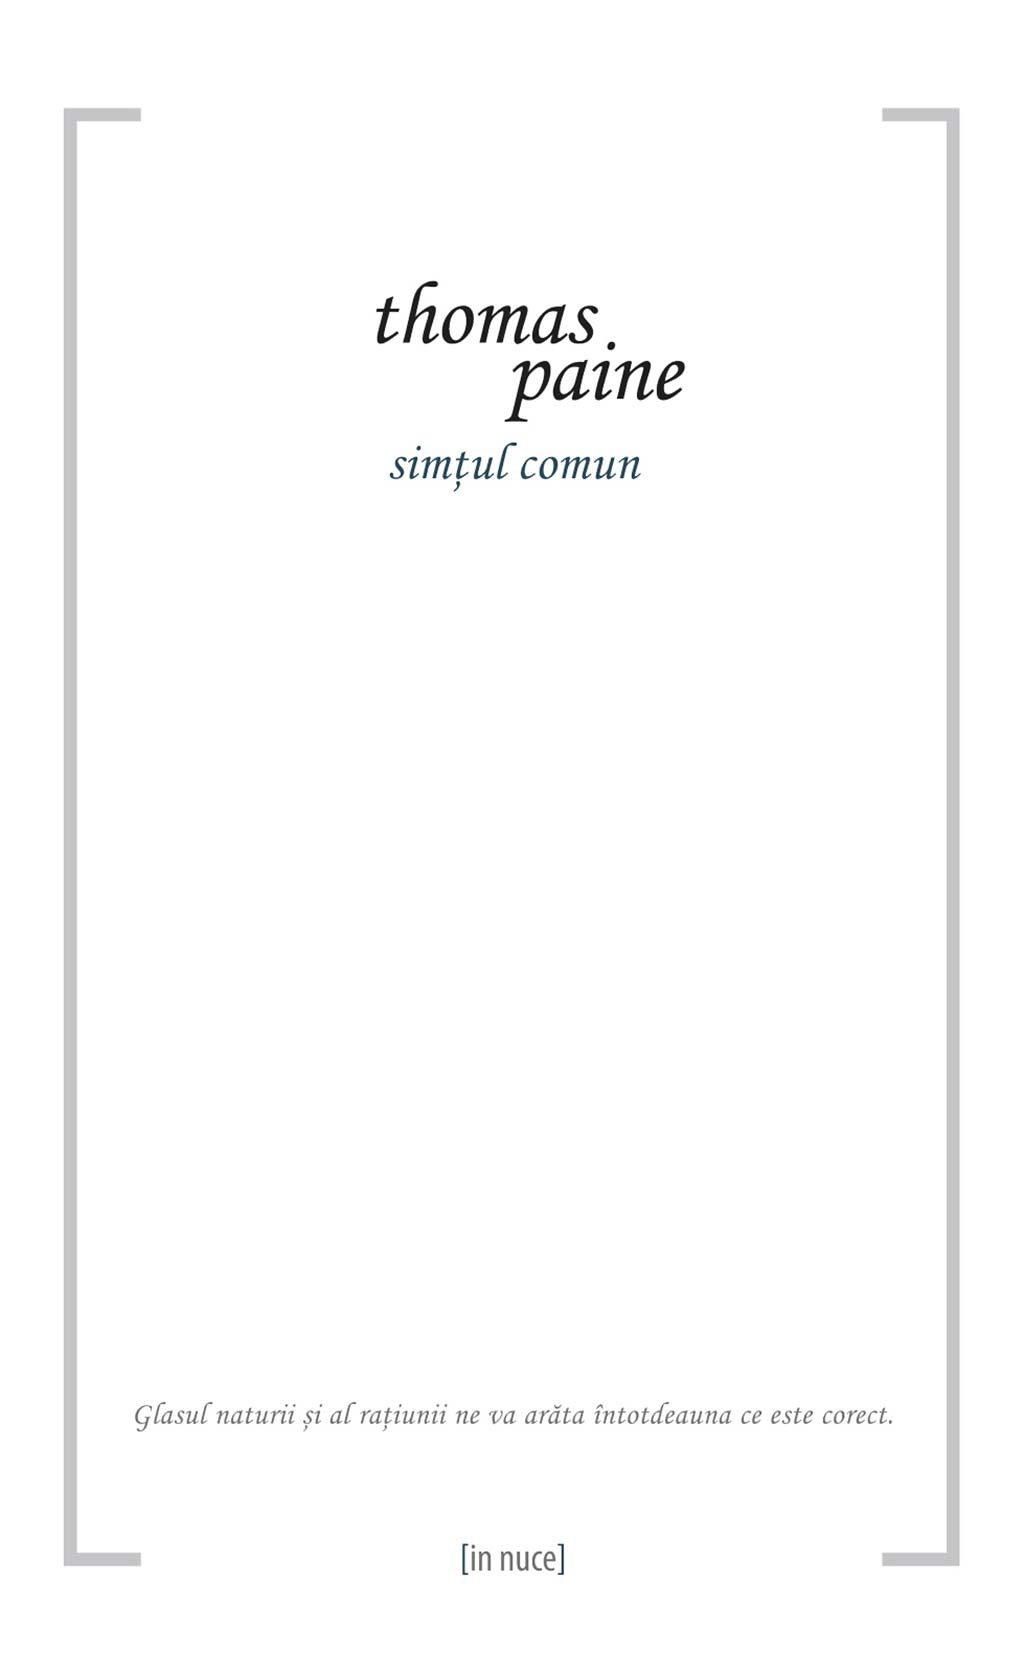 Simtul comun - Thomas Paine